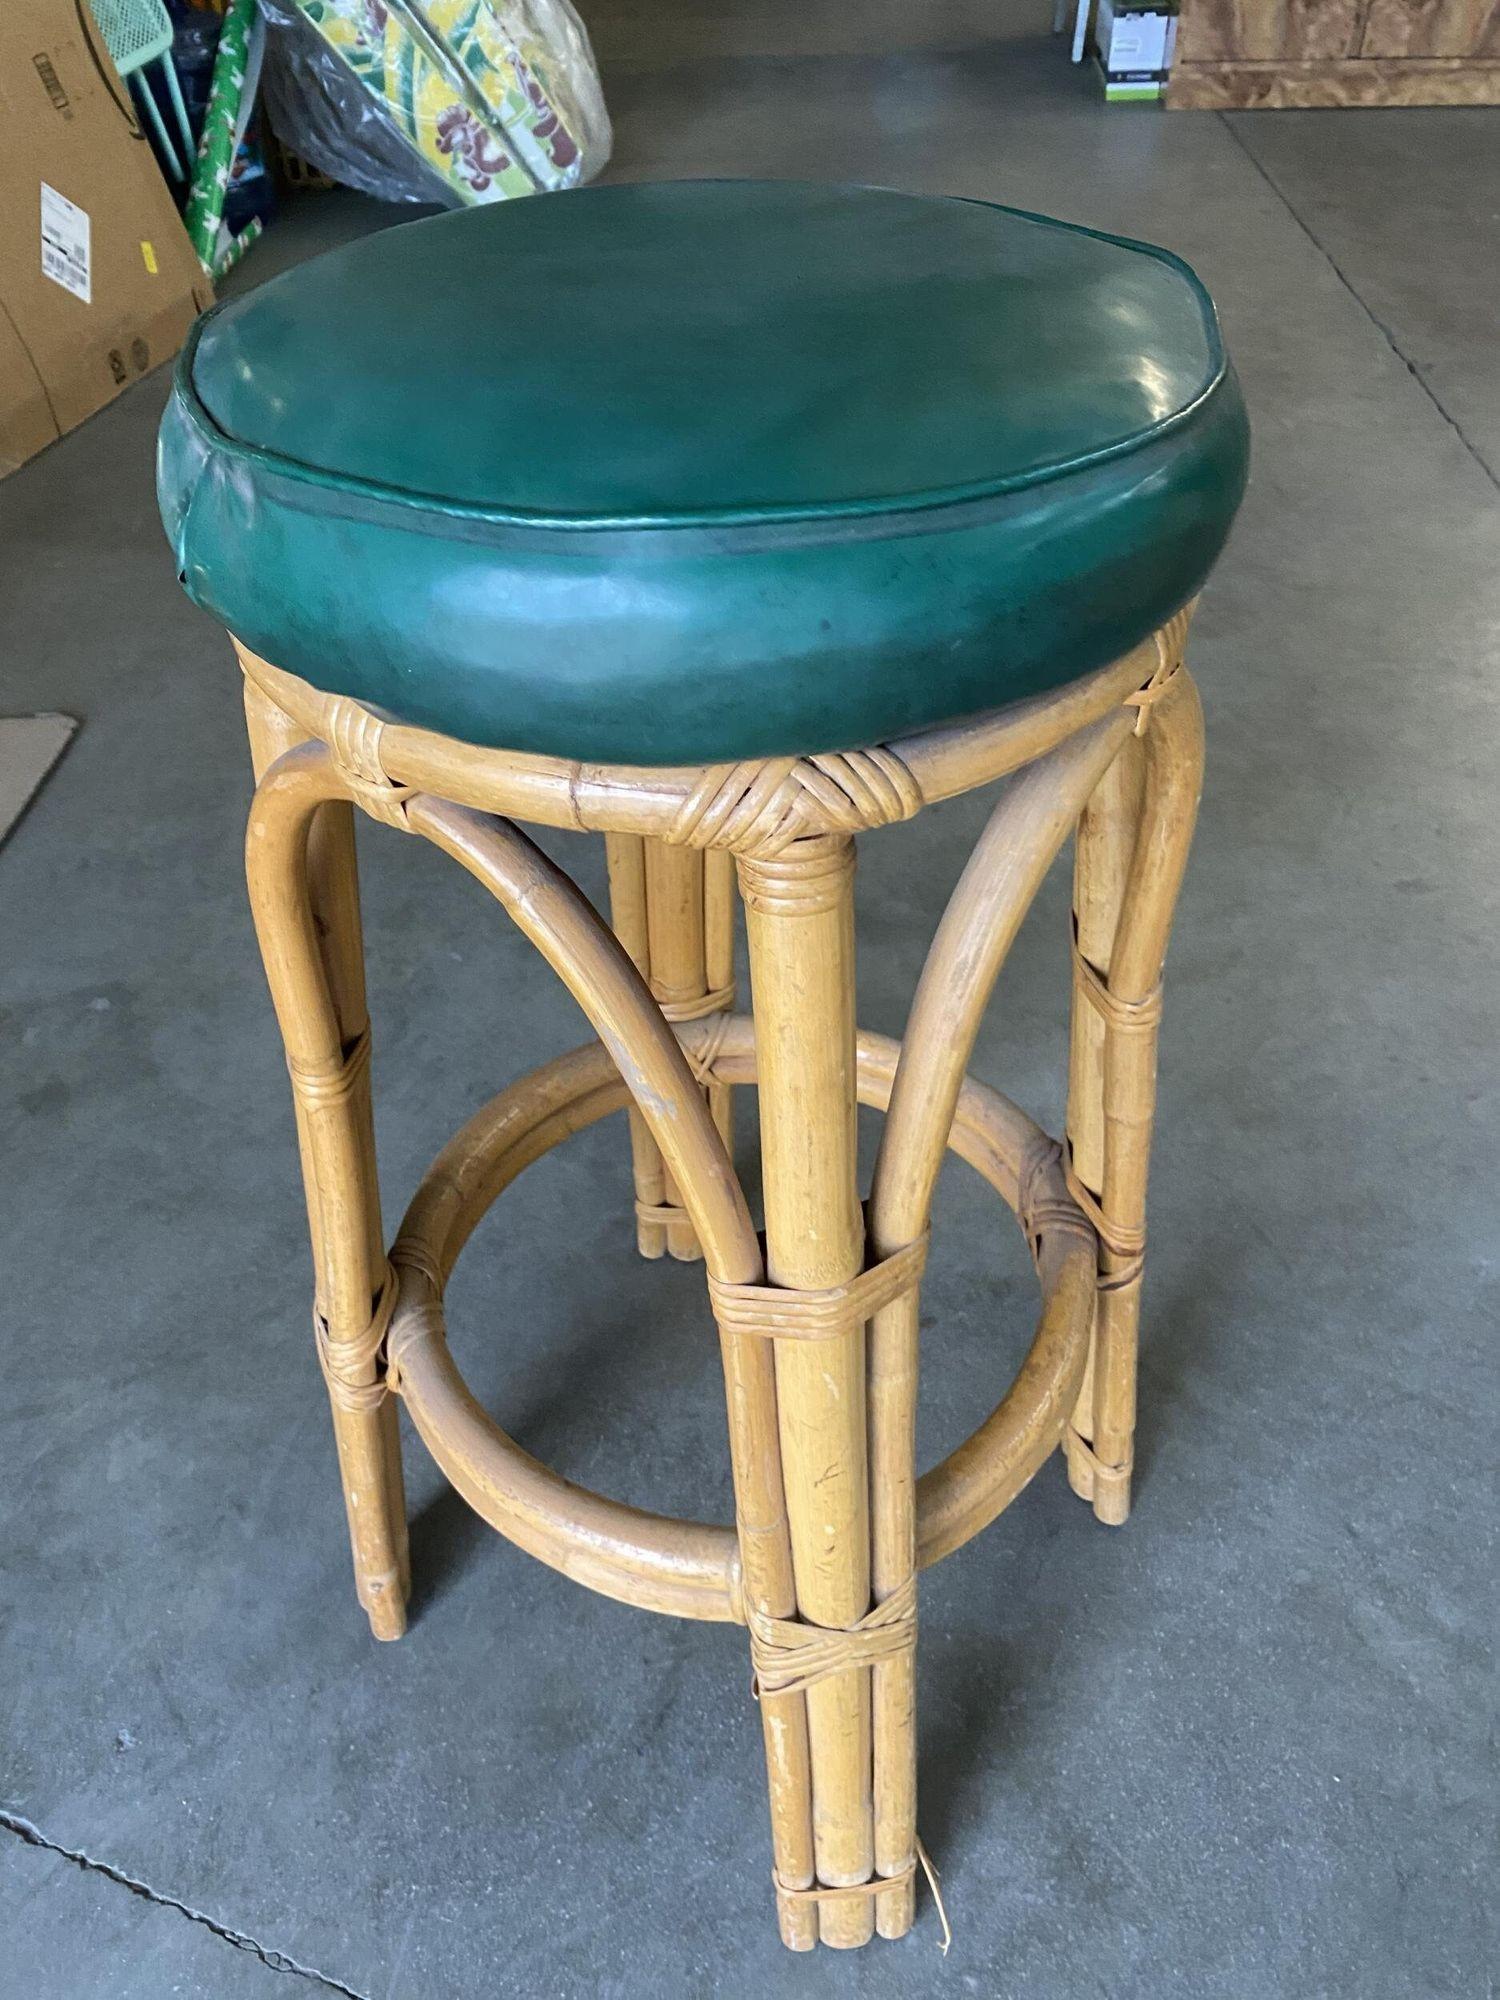 stool is dark green